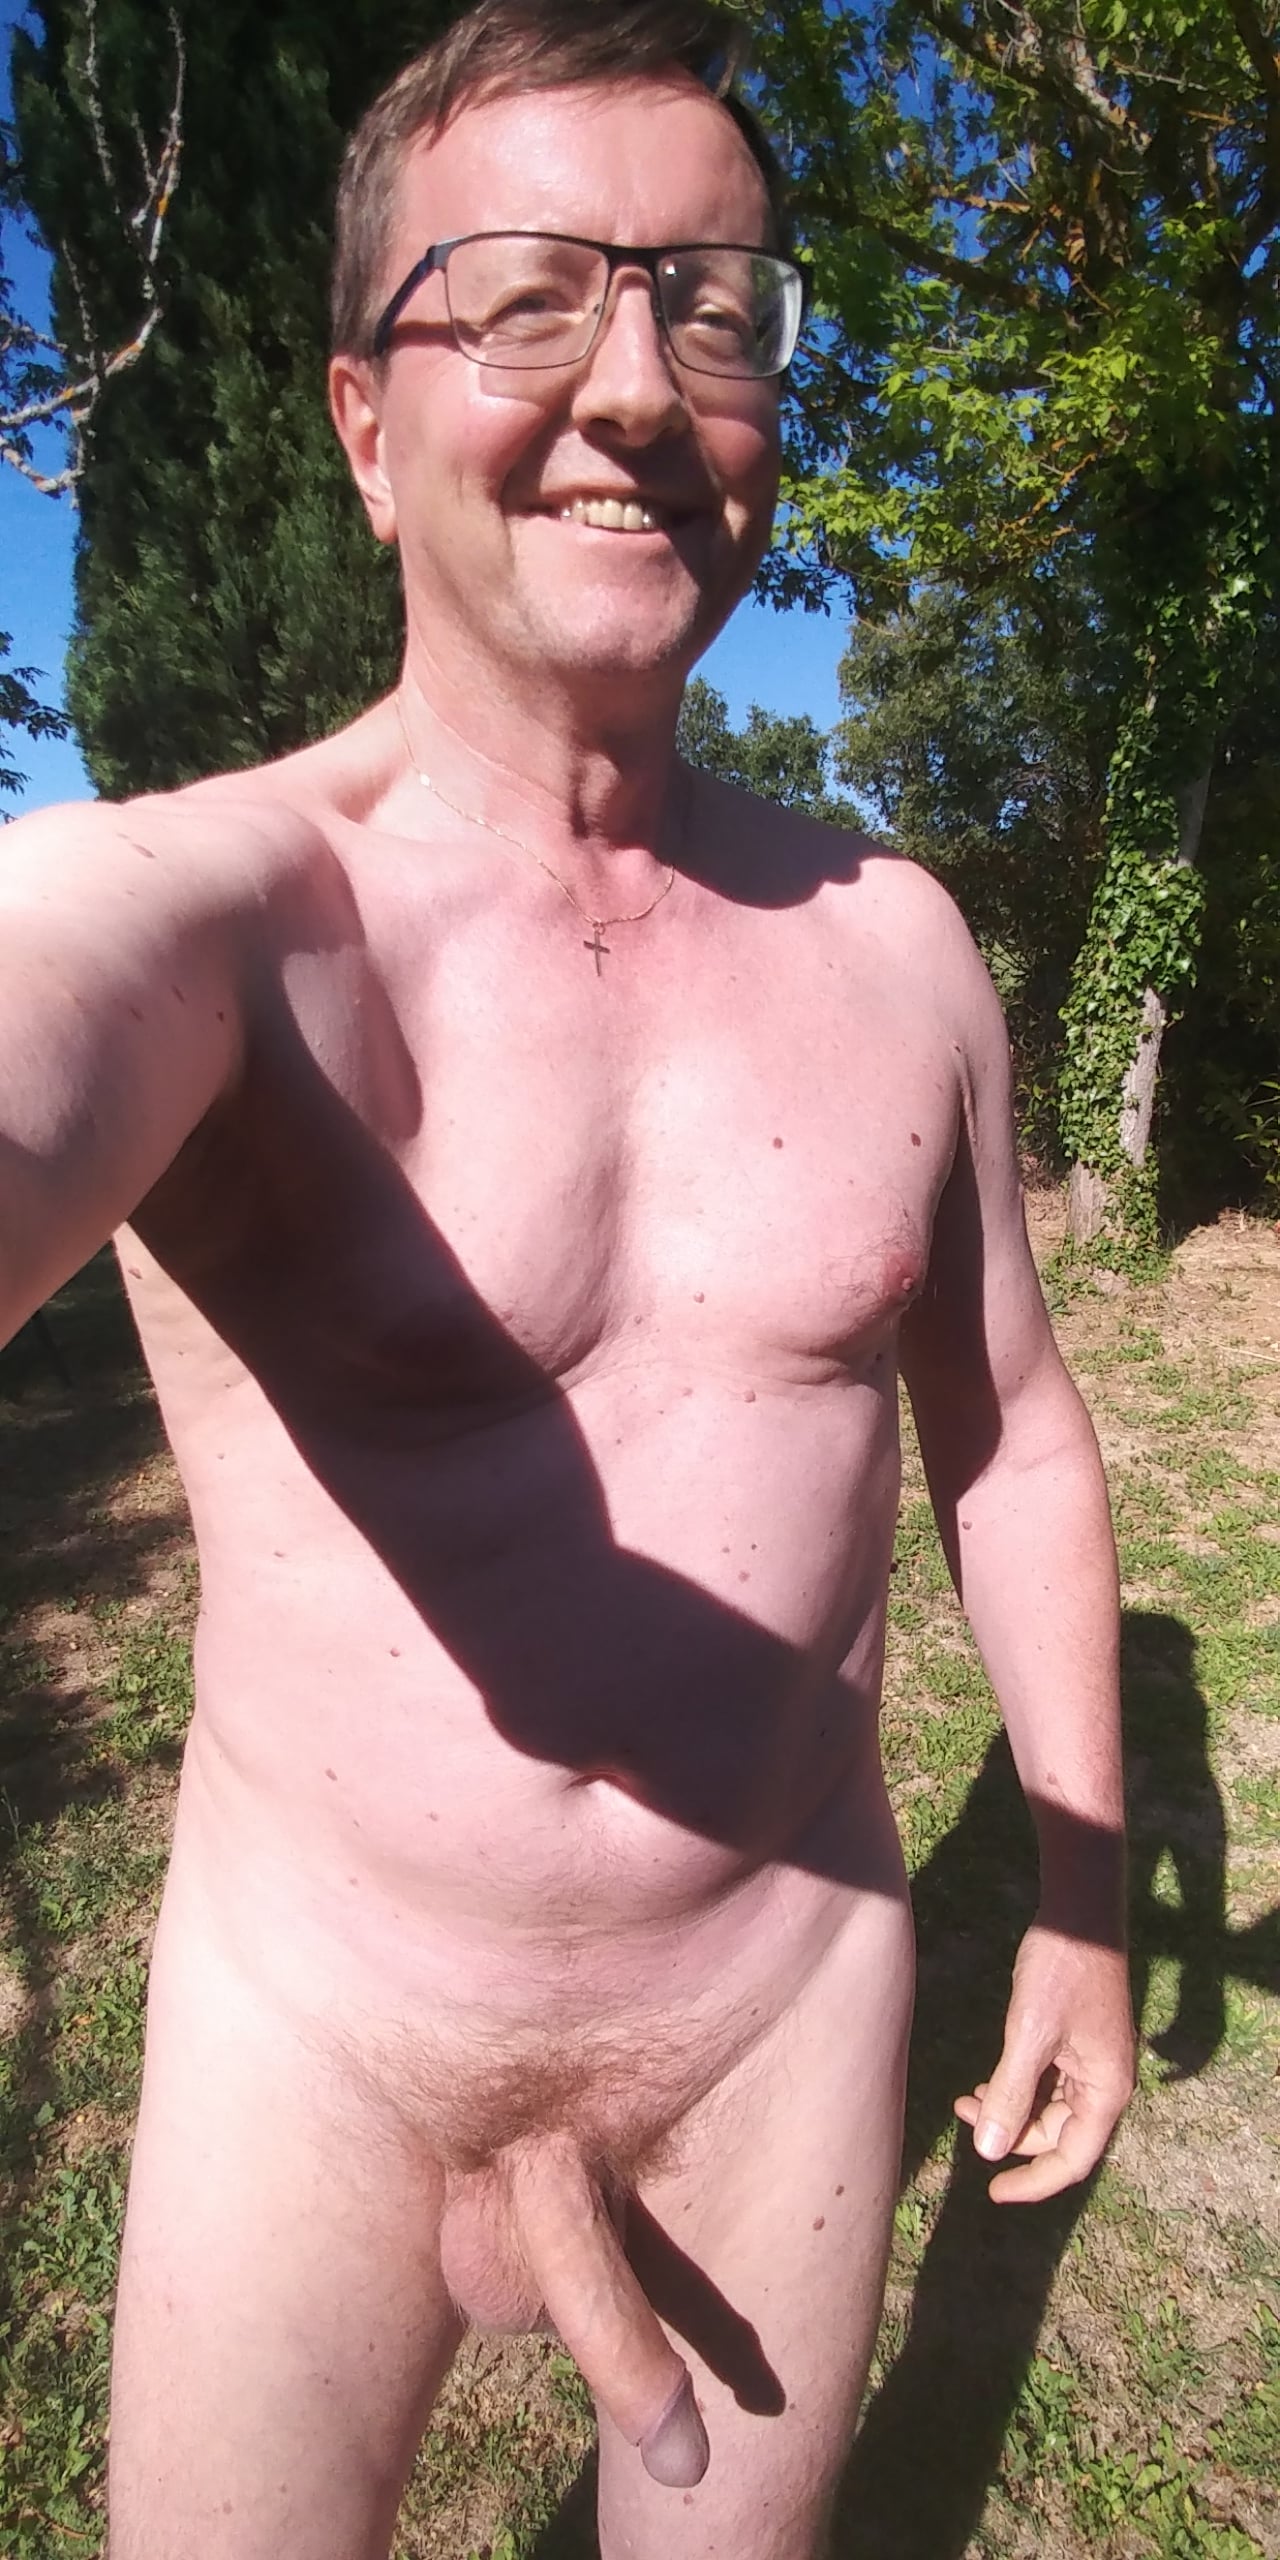 nude fuckable grandpa tumblr - Lothar outdoor nude hiking Nice and sunny day for nude hiking. - Dick Flash Pics